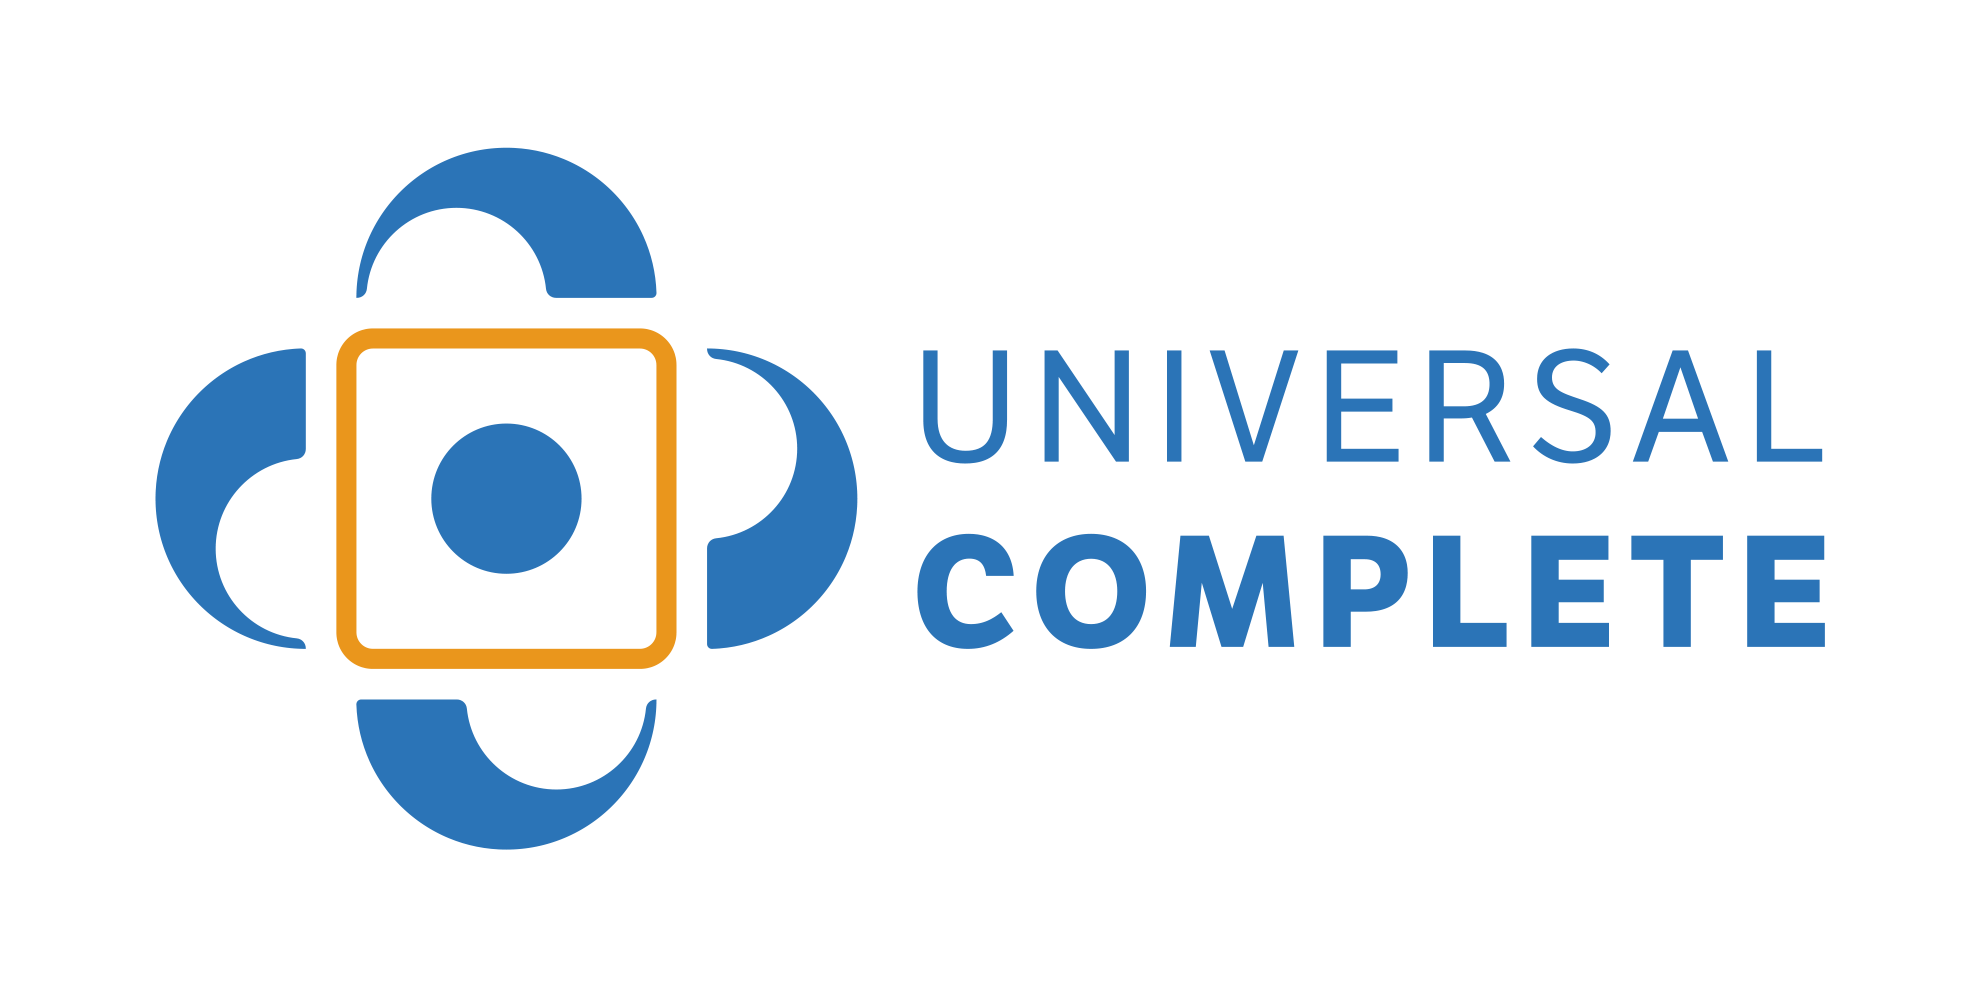 Universal Complete